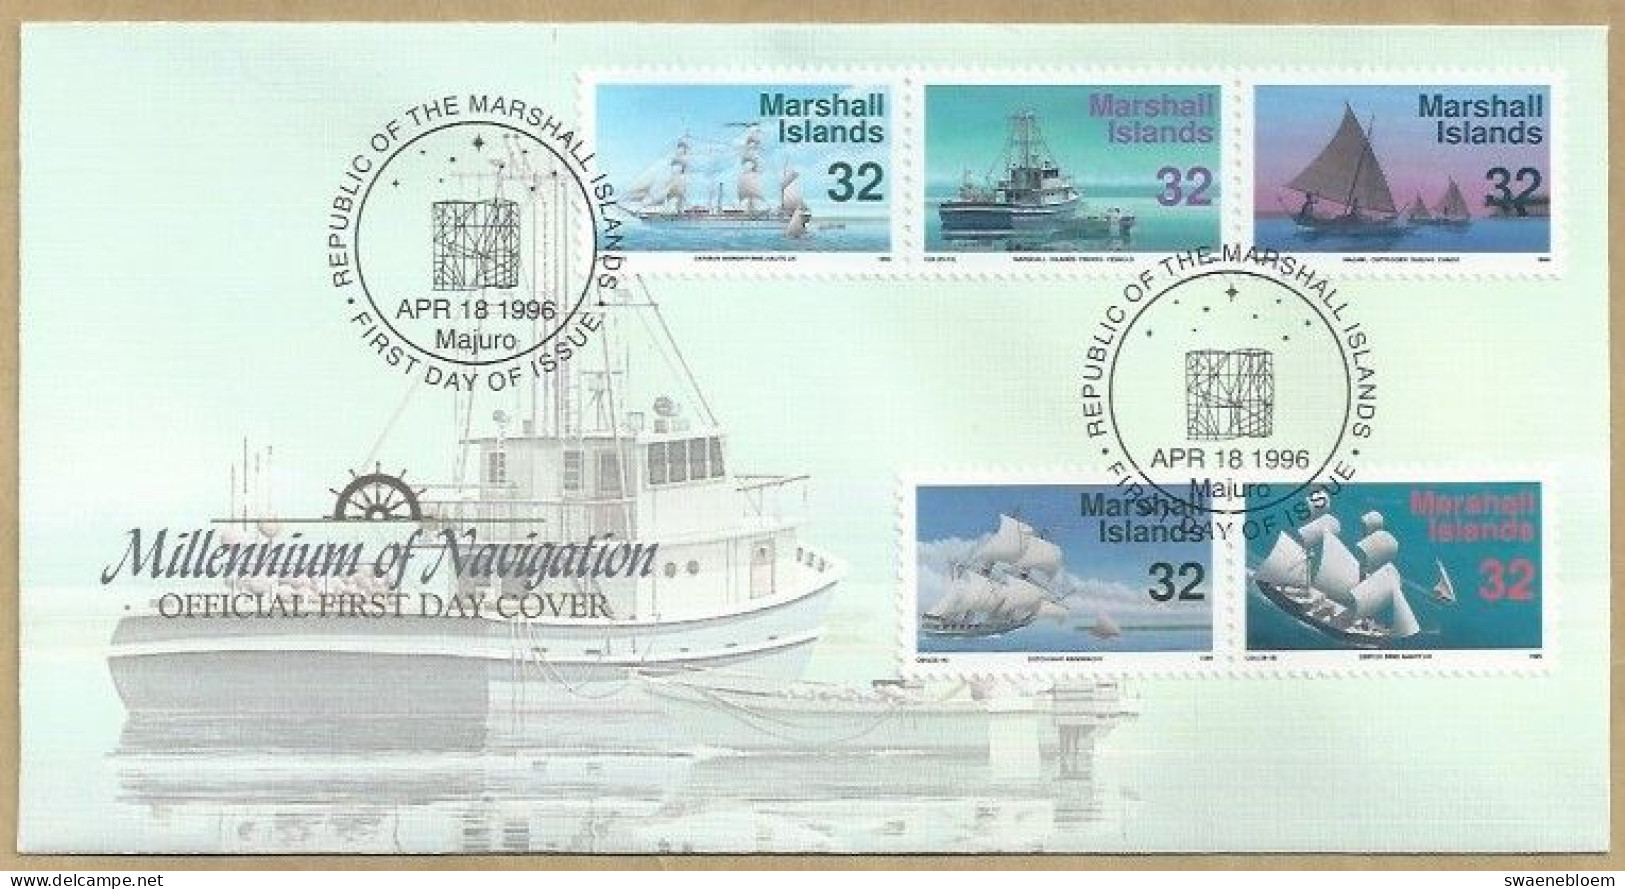 FDC. REPUBLIC OF THE MARSHALL ISLANDS. APR 18 1996 MAJURO. MILLENNIUM OF NAVIGATION. C94.FDC. (3). - Marshalleilanden